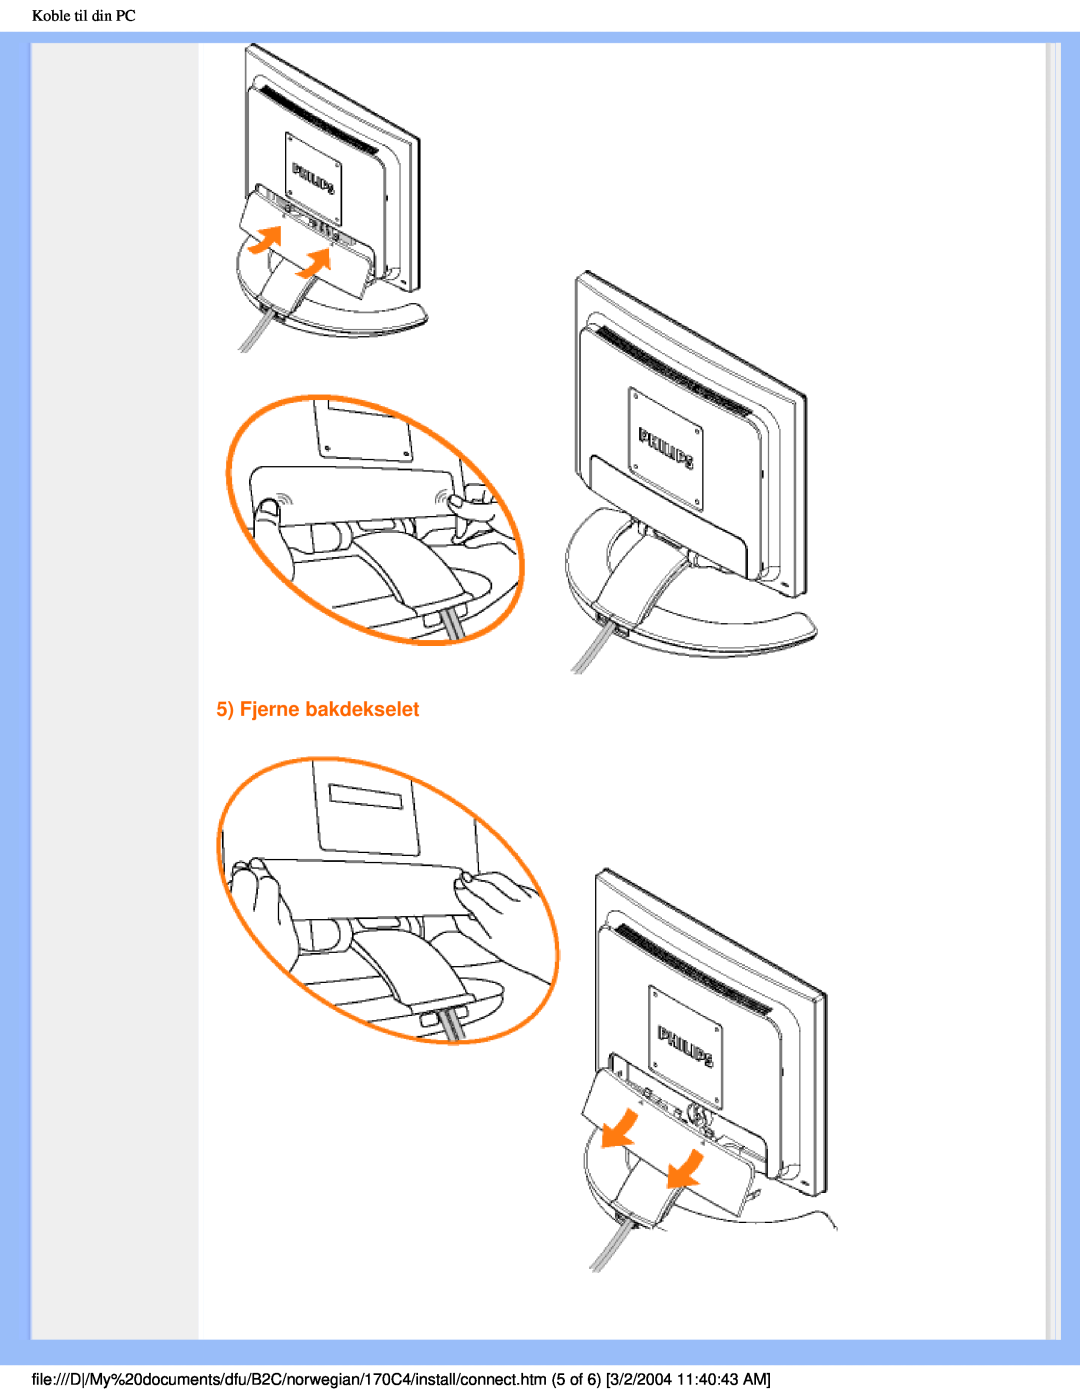 Philips 170C4 user manual Fjerne bakdekselet, Koble til din PC 